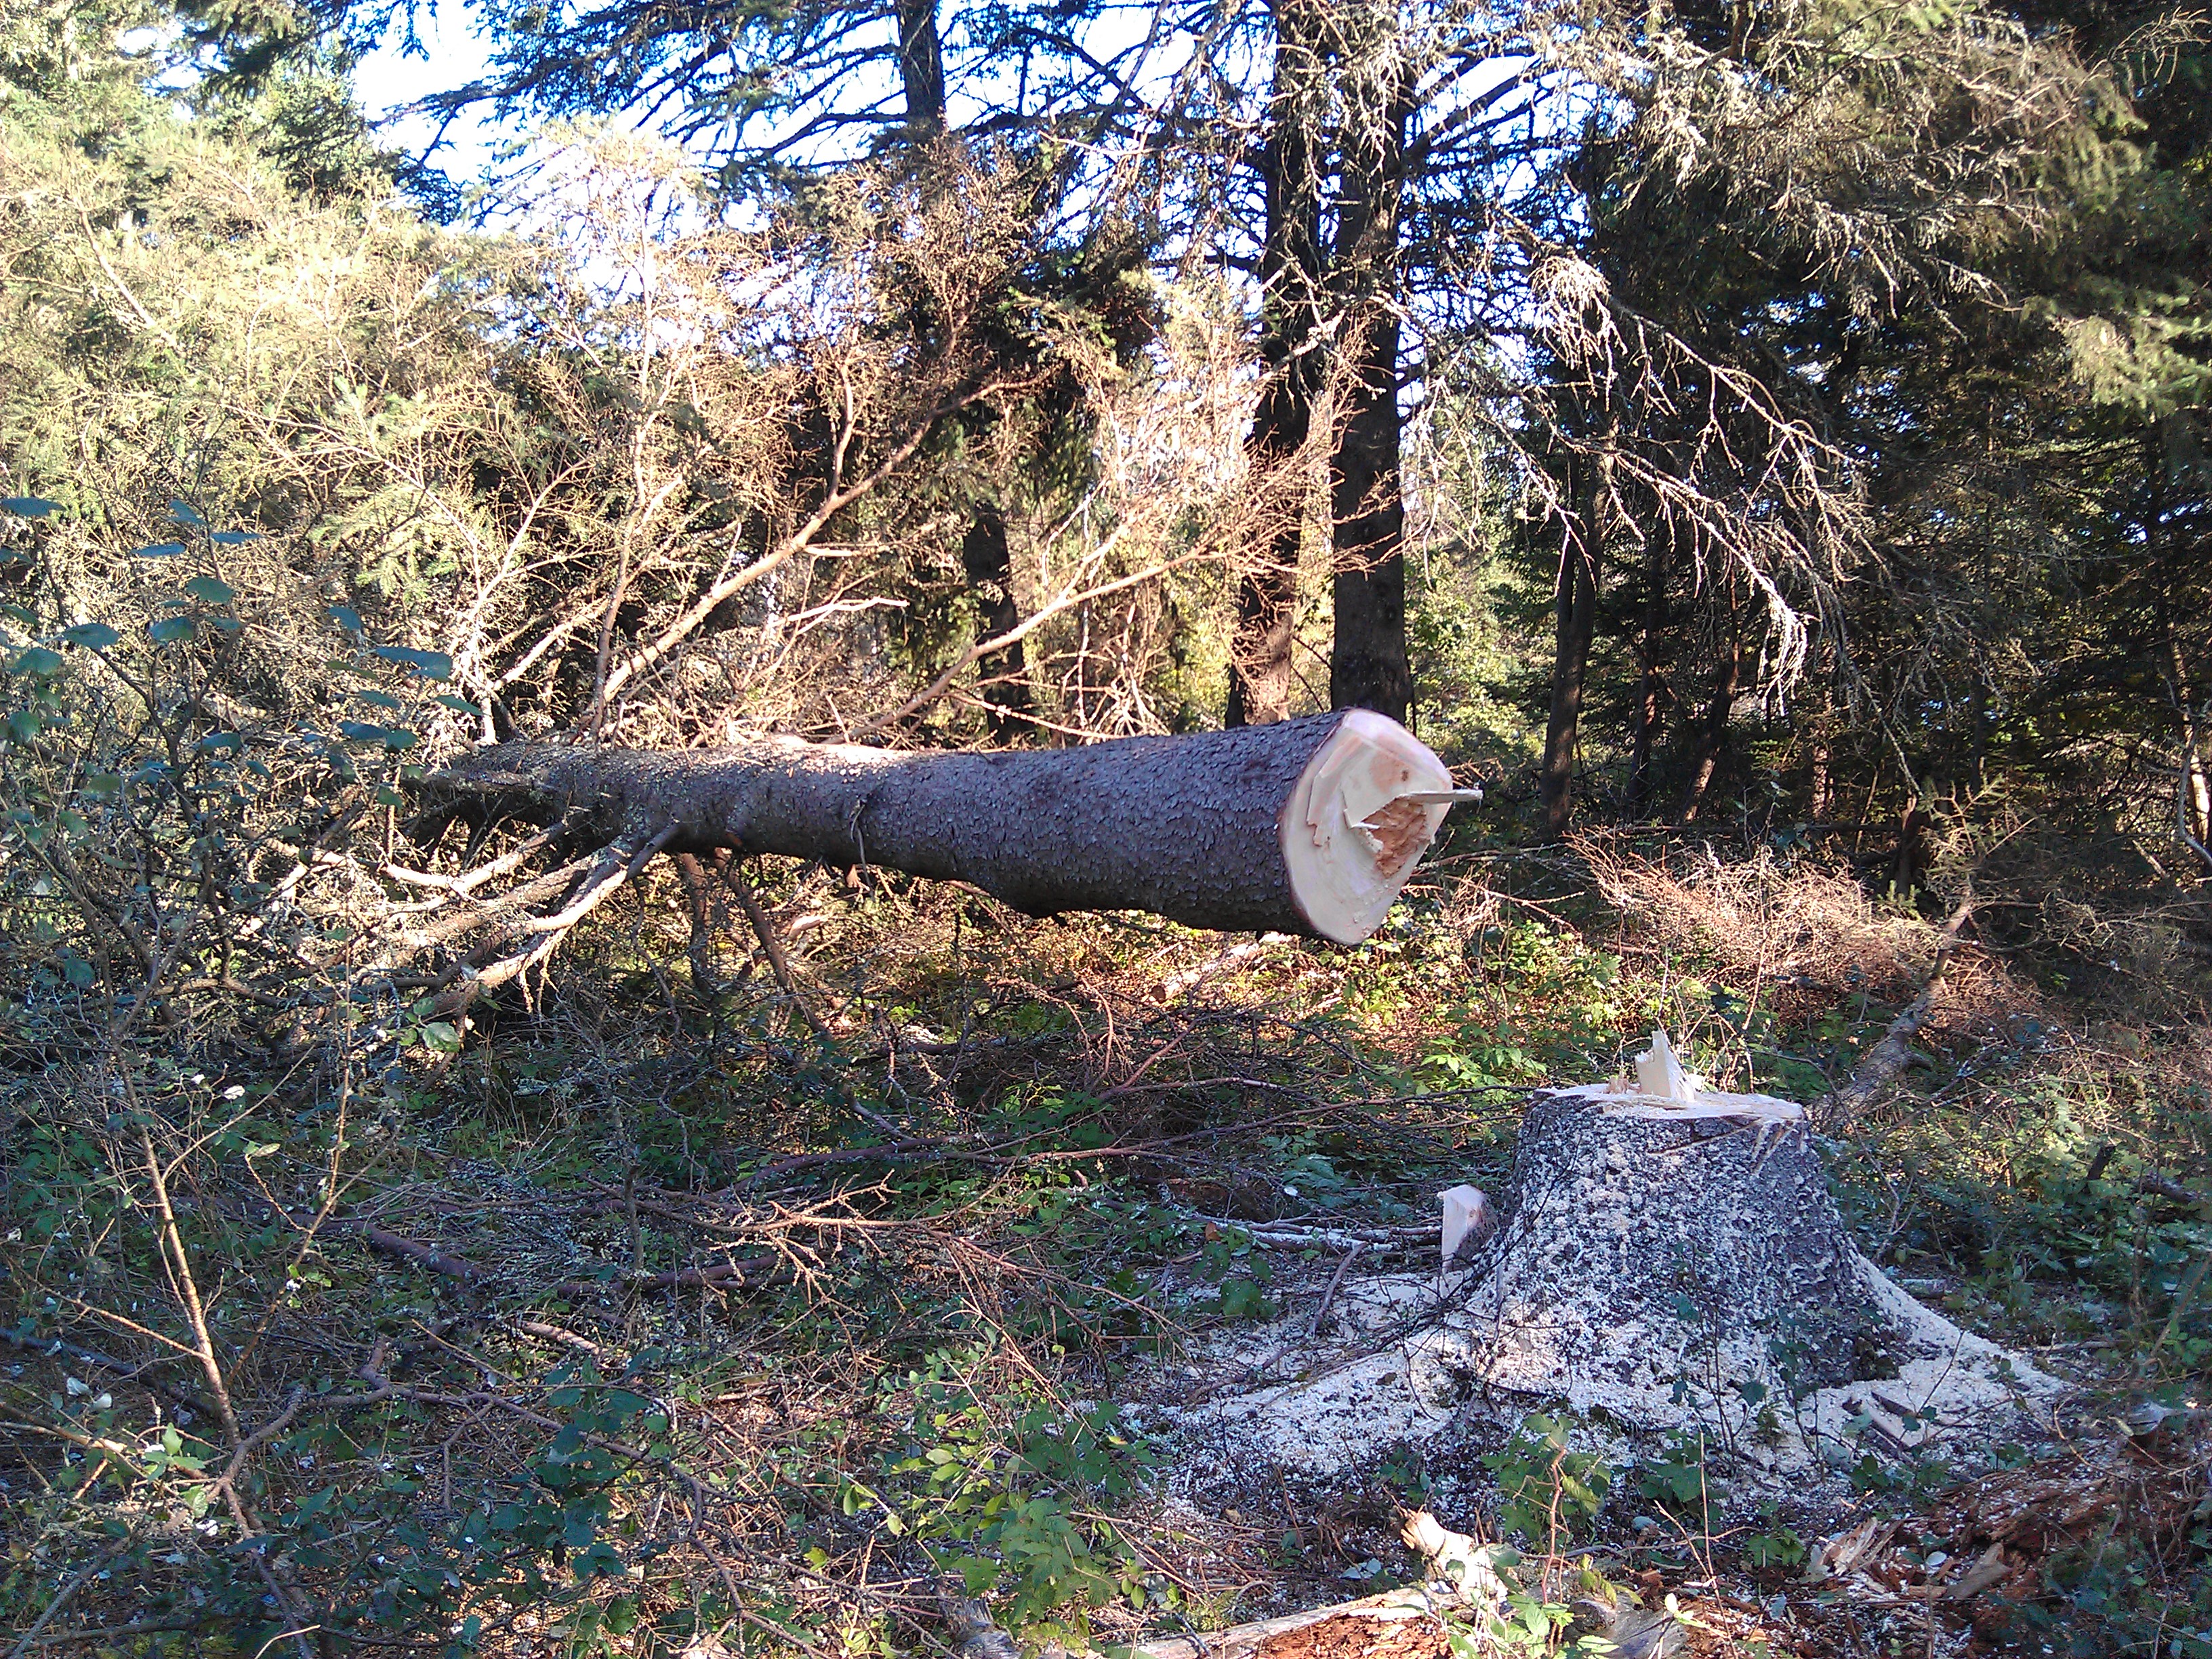 Cut-down trees